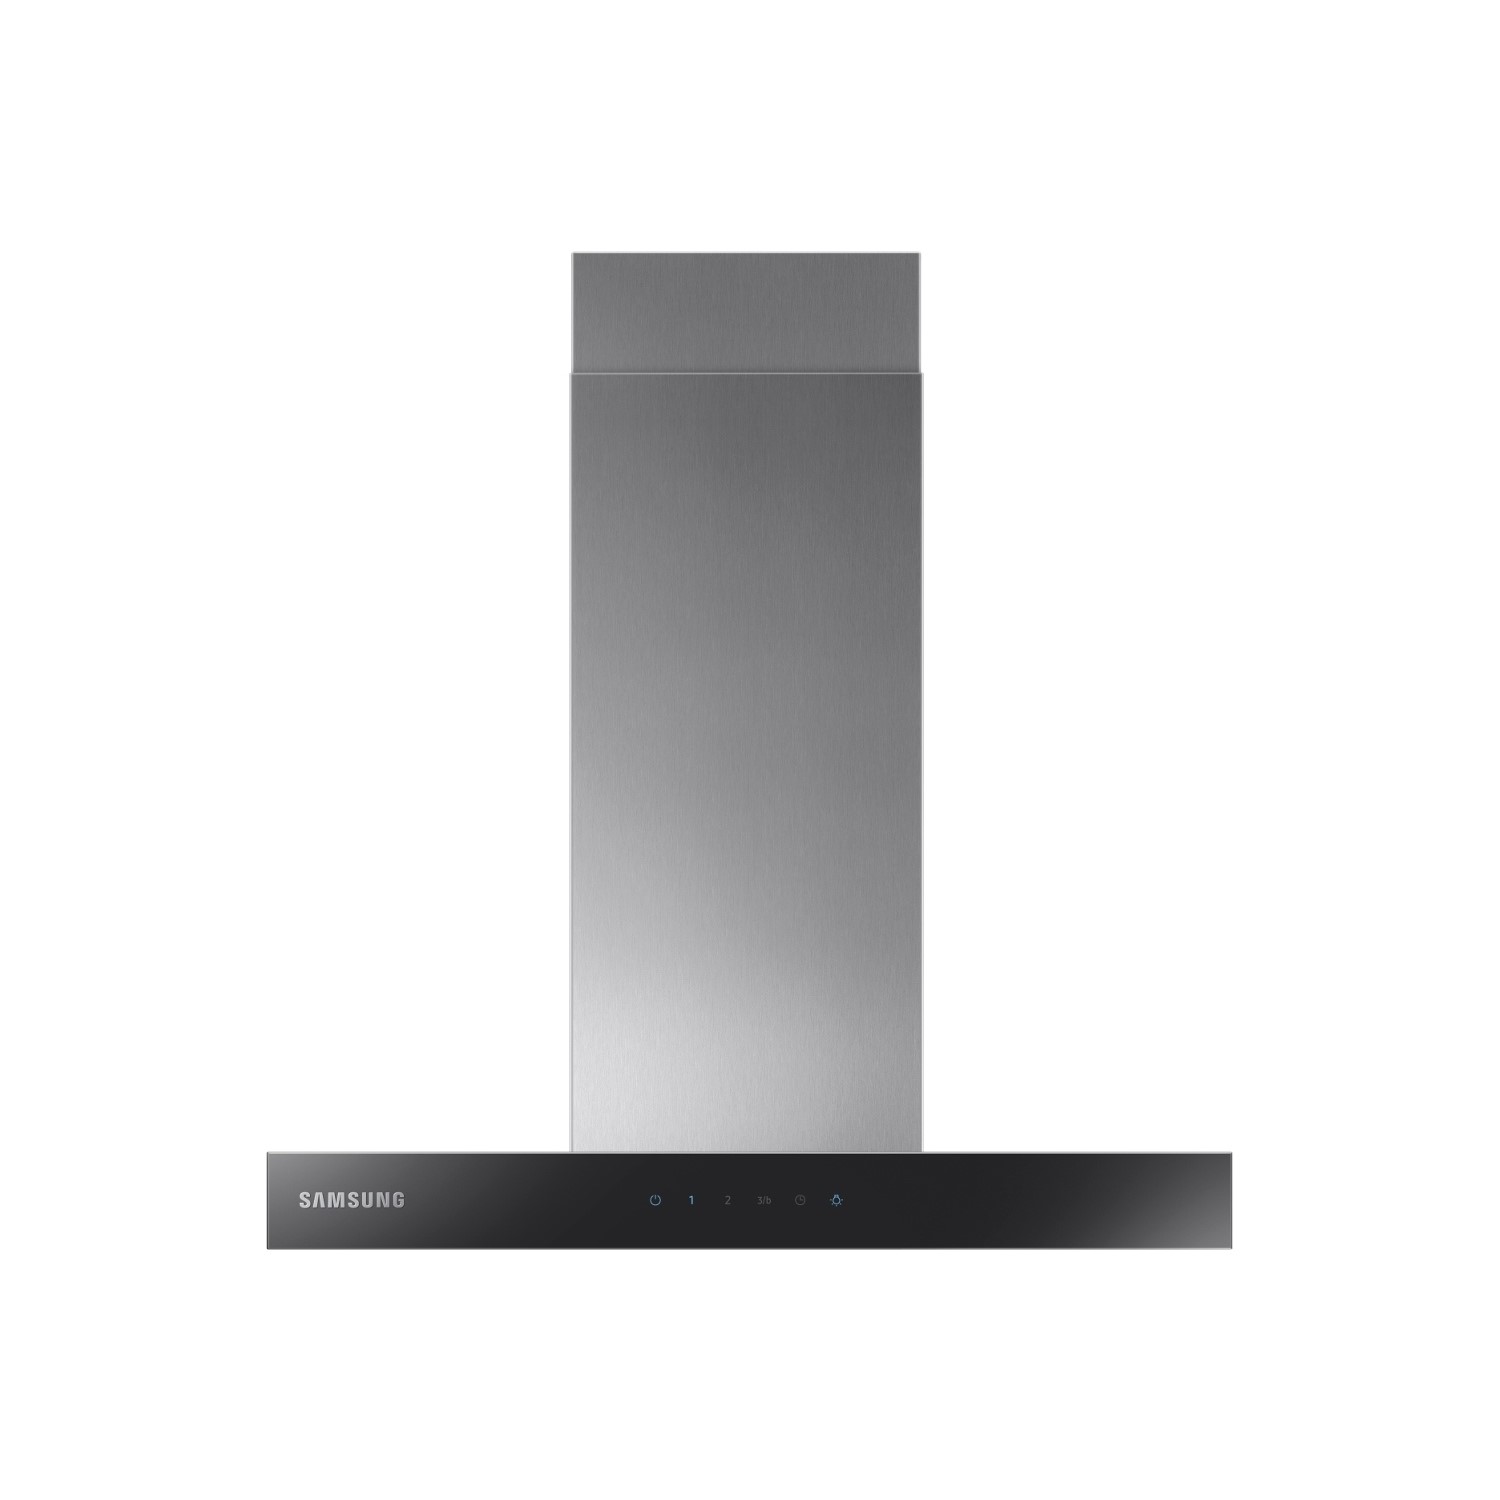 Samsung 60cm Slimline Chimney Cooker Hood - Stainless Steel With Black Glass